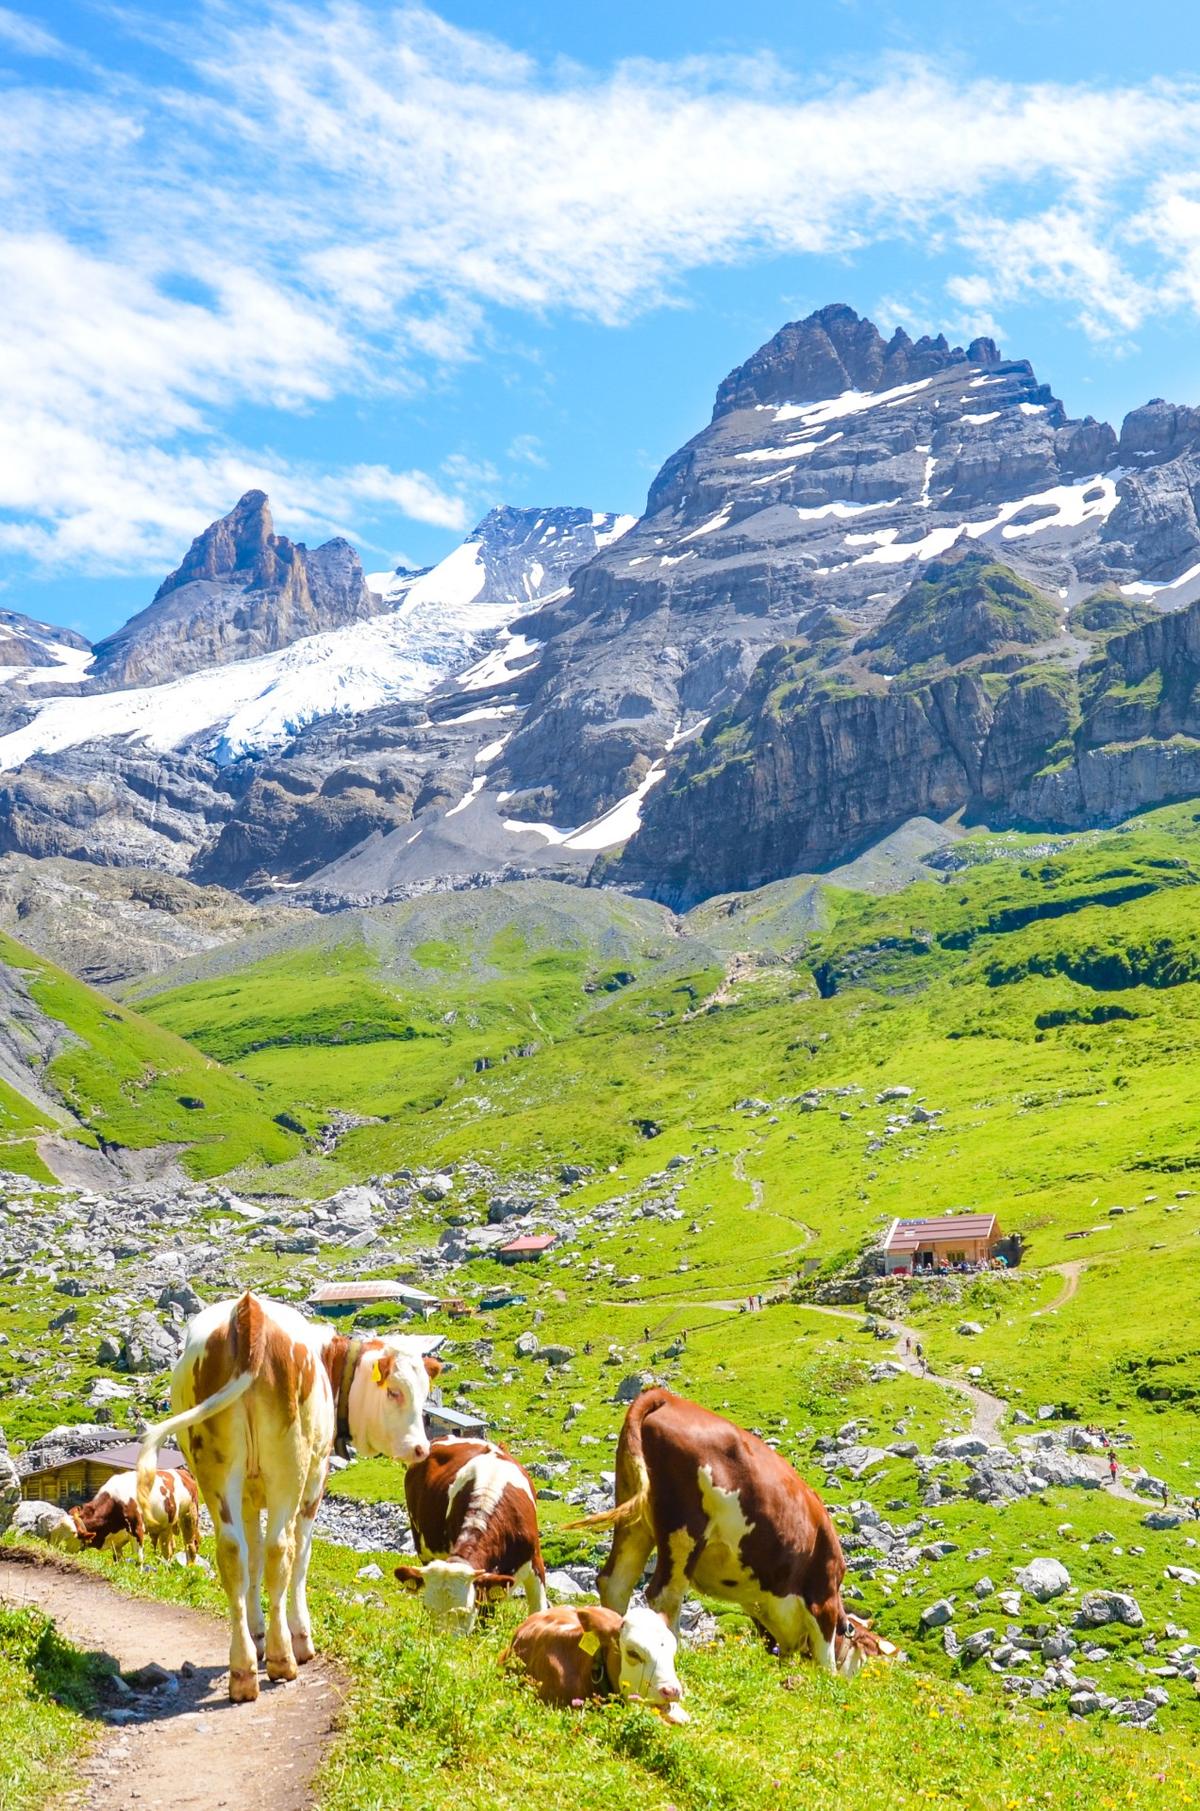 Swiss cows graze on lush Alpine pastures. (Von Petr Pohudka)